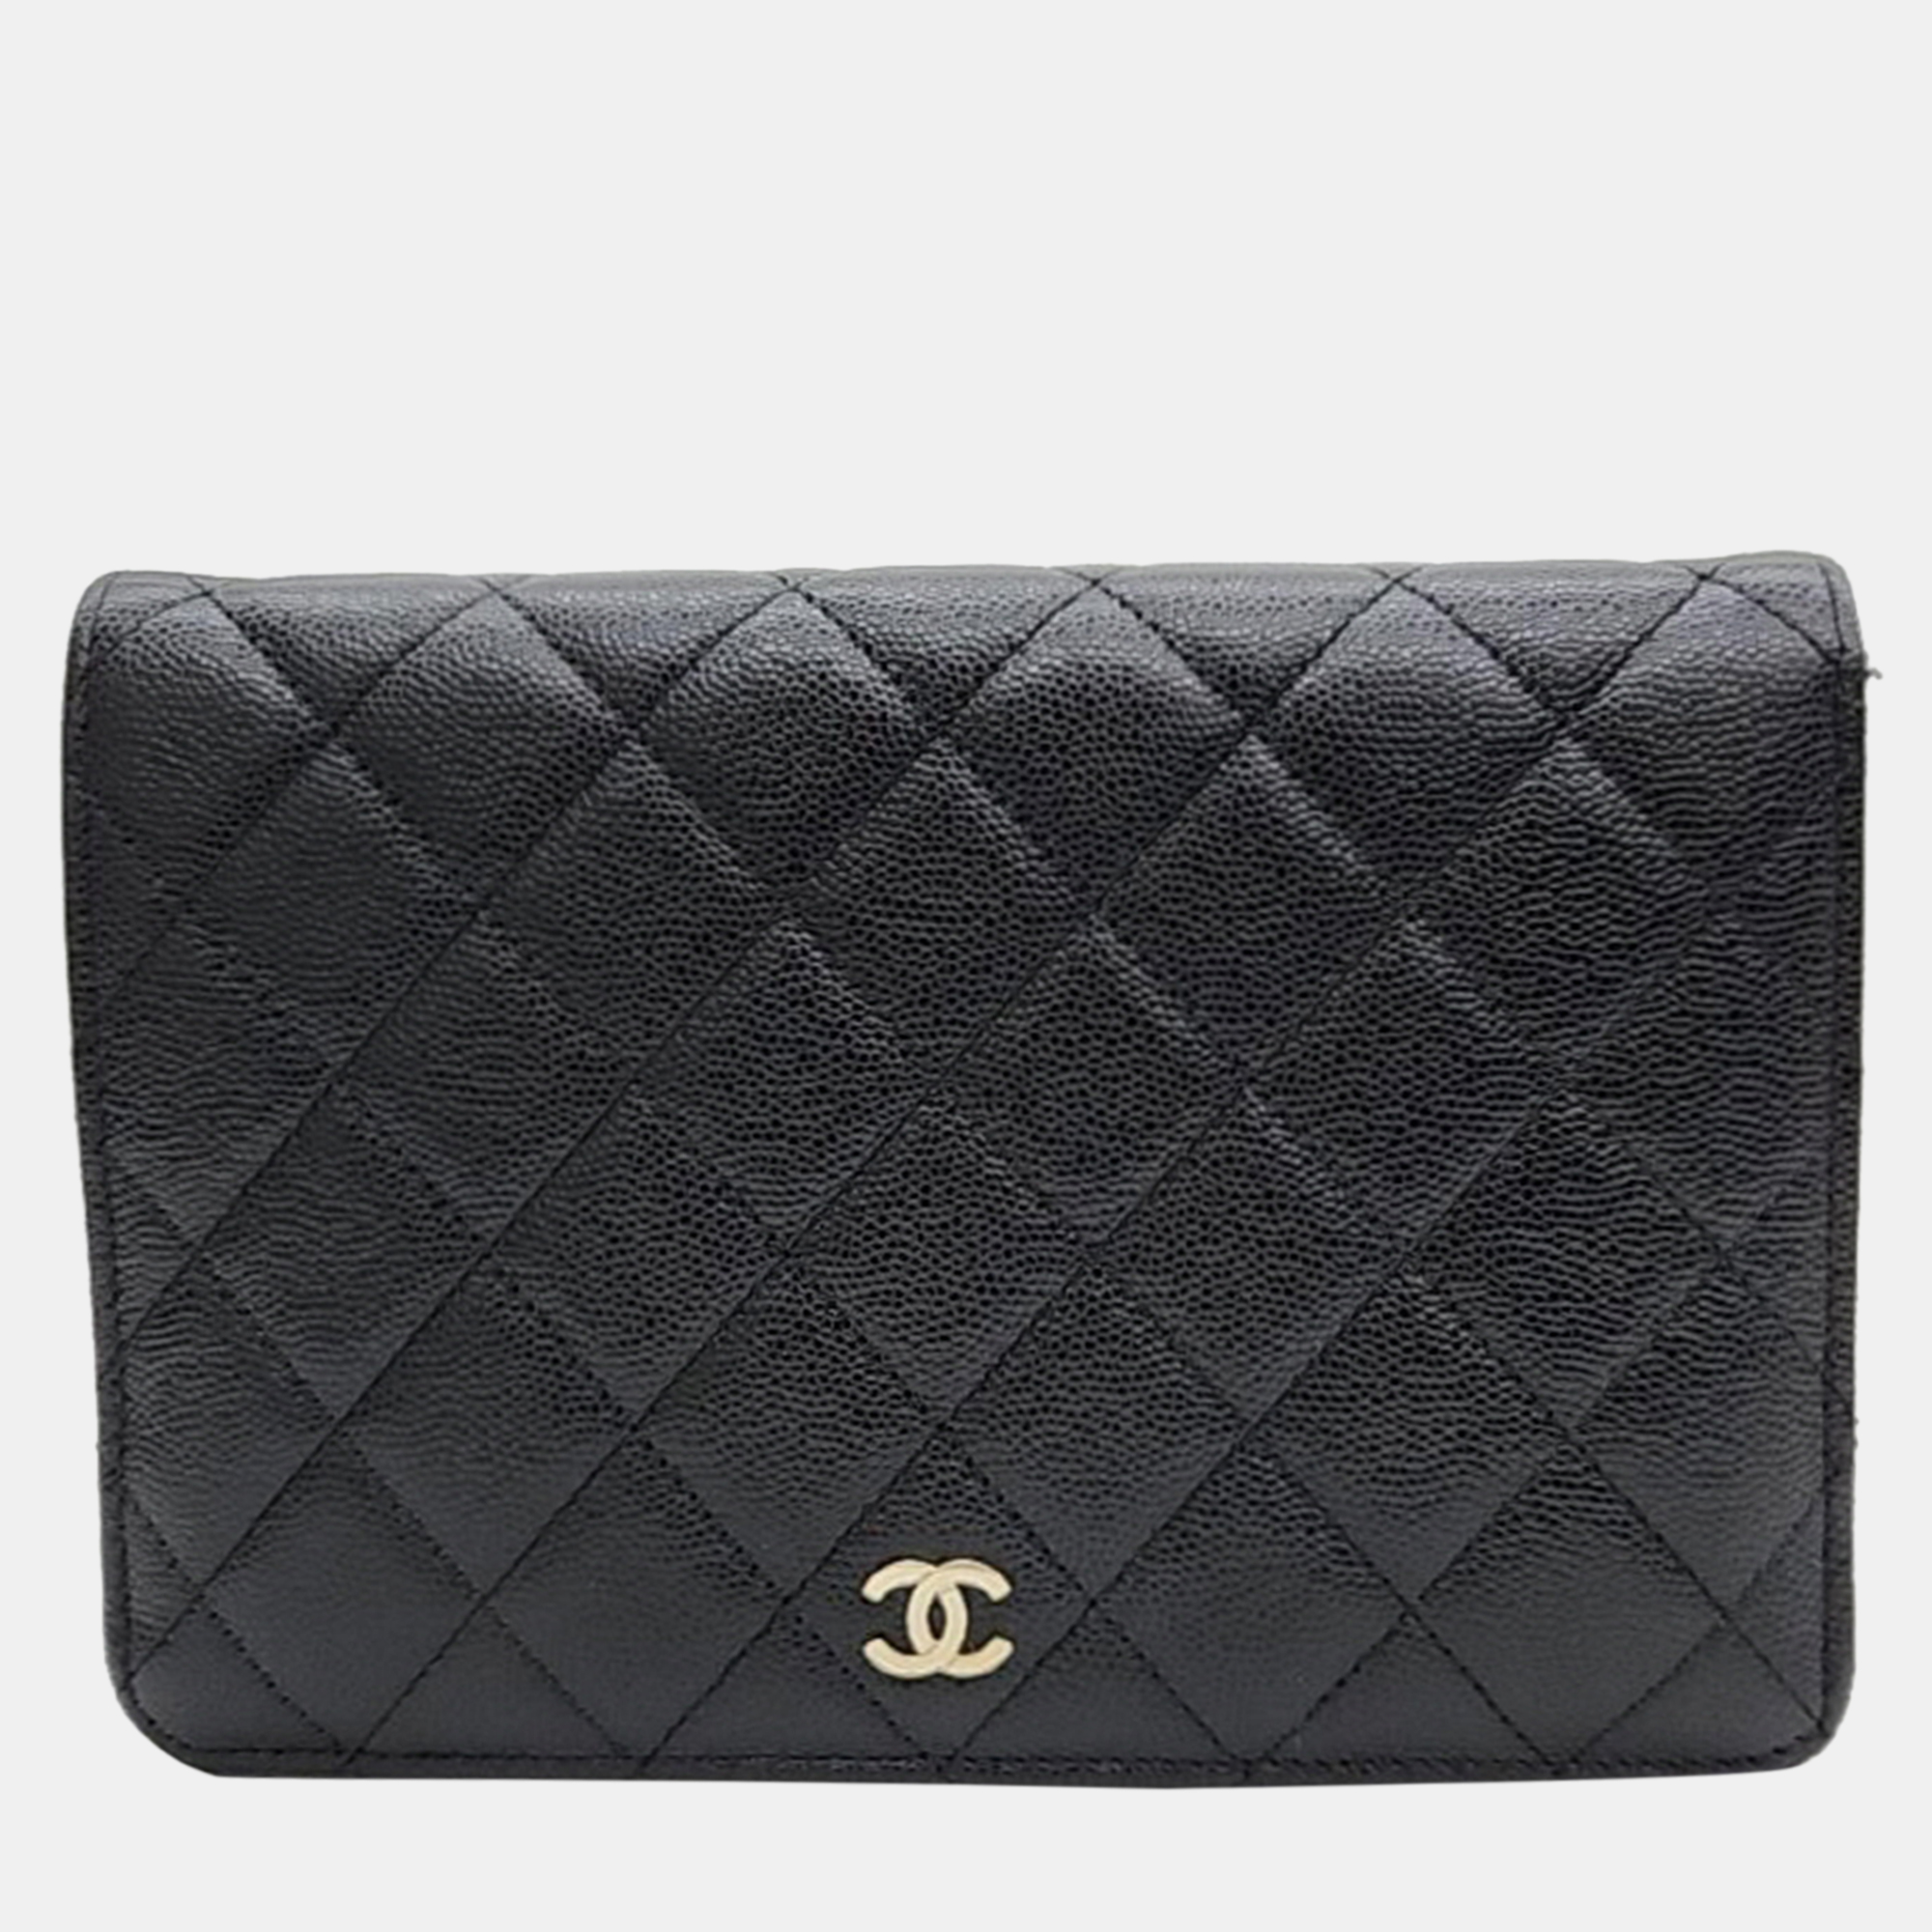 Chanel black caviar leather mini chain crossbody bag